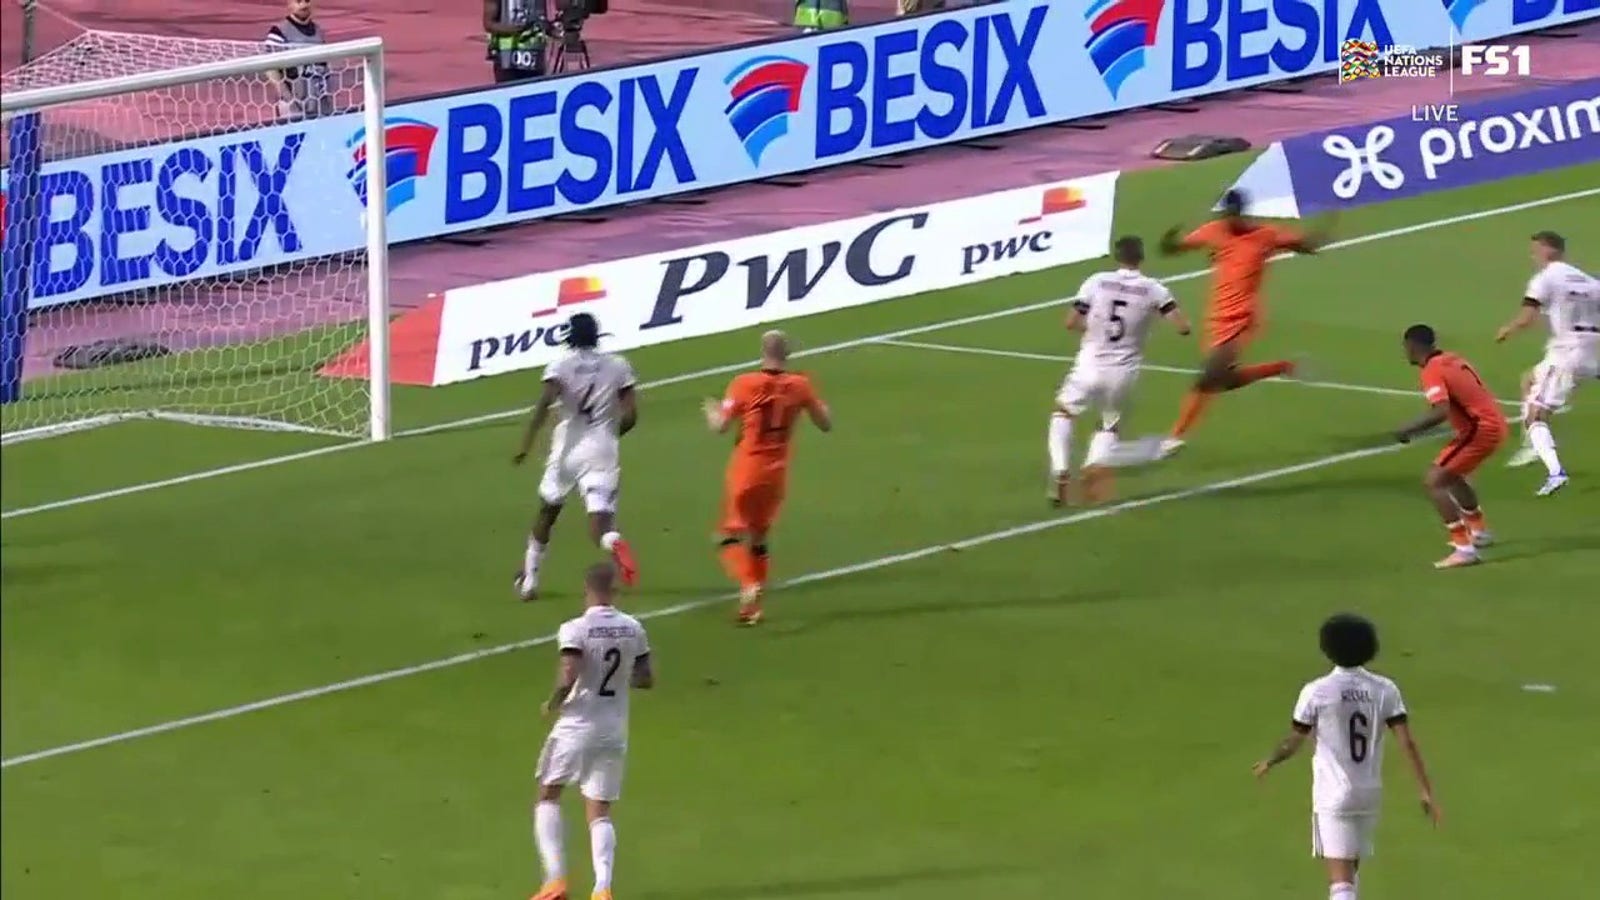 Denzel Dumfries extends the Netherlands' lead to 3-0 vs. Belgium